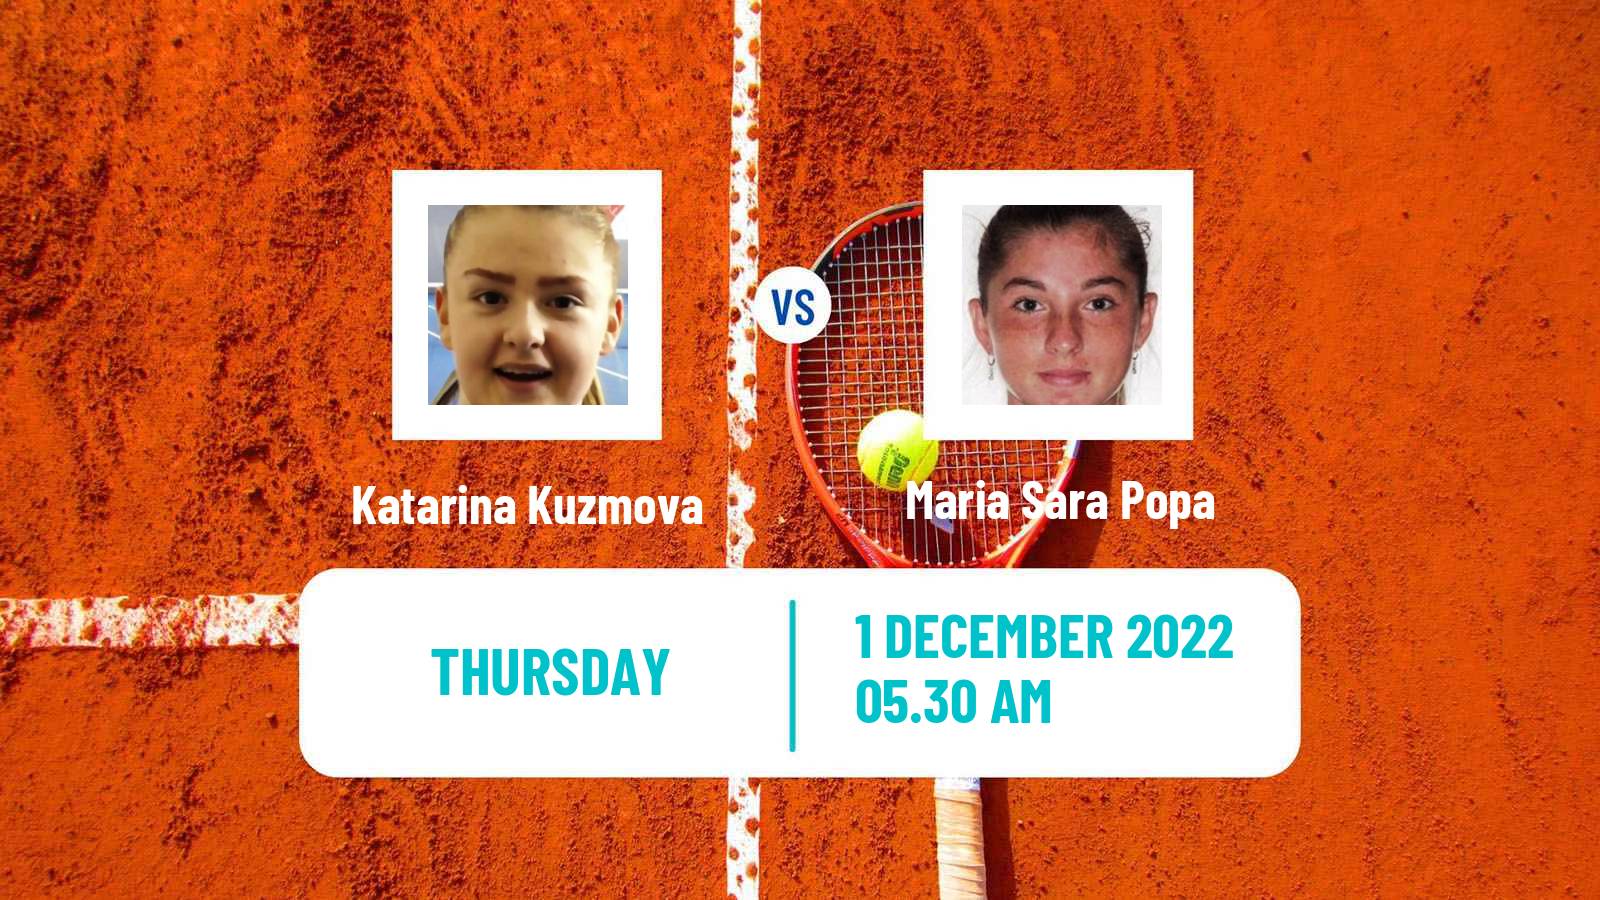 Tennis ITF Tournaments Katarina Kuzmova - Maria Sara Popa